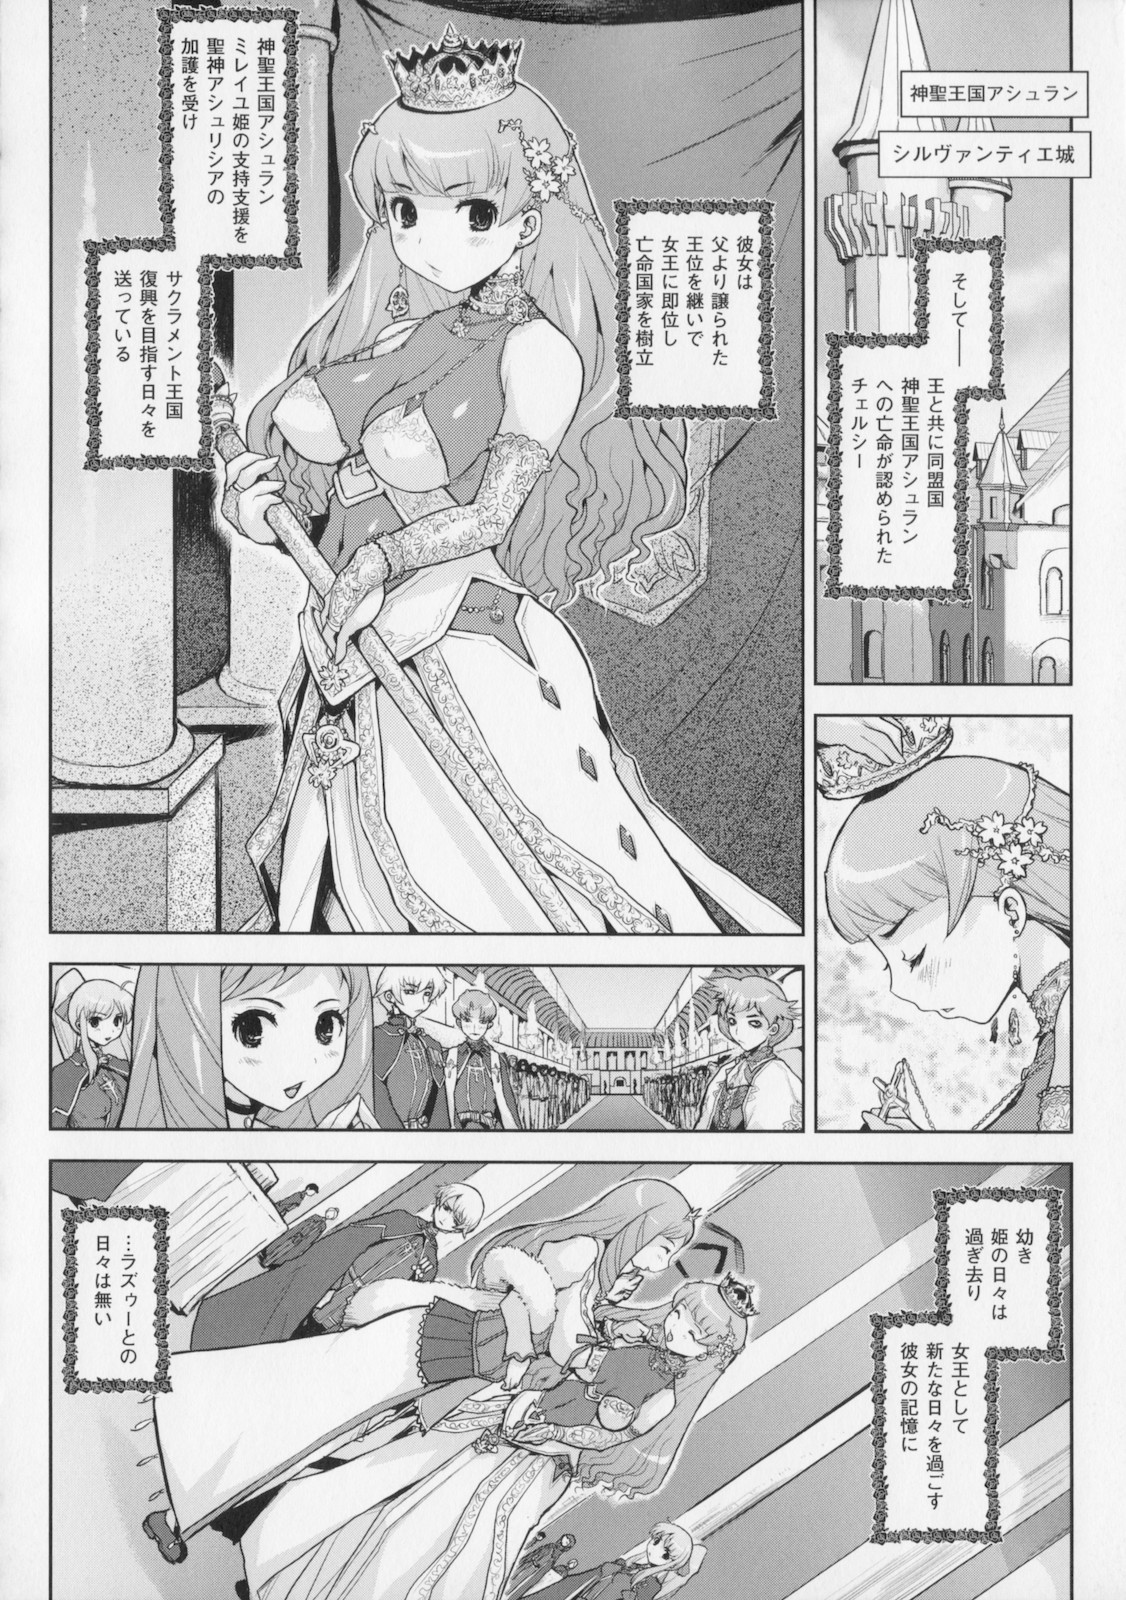 [Kikenn Sisou (DangerouS ThoughtS)] Princess Fall Down -Darakuhime- [危険思想] プリンセスフォールダウン -堕落姫-